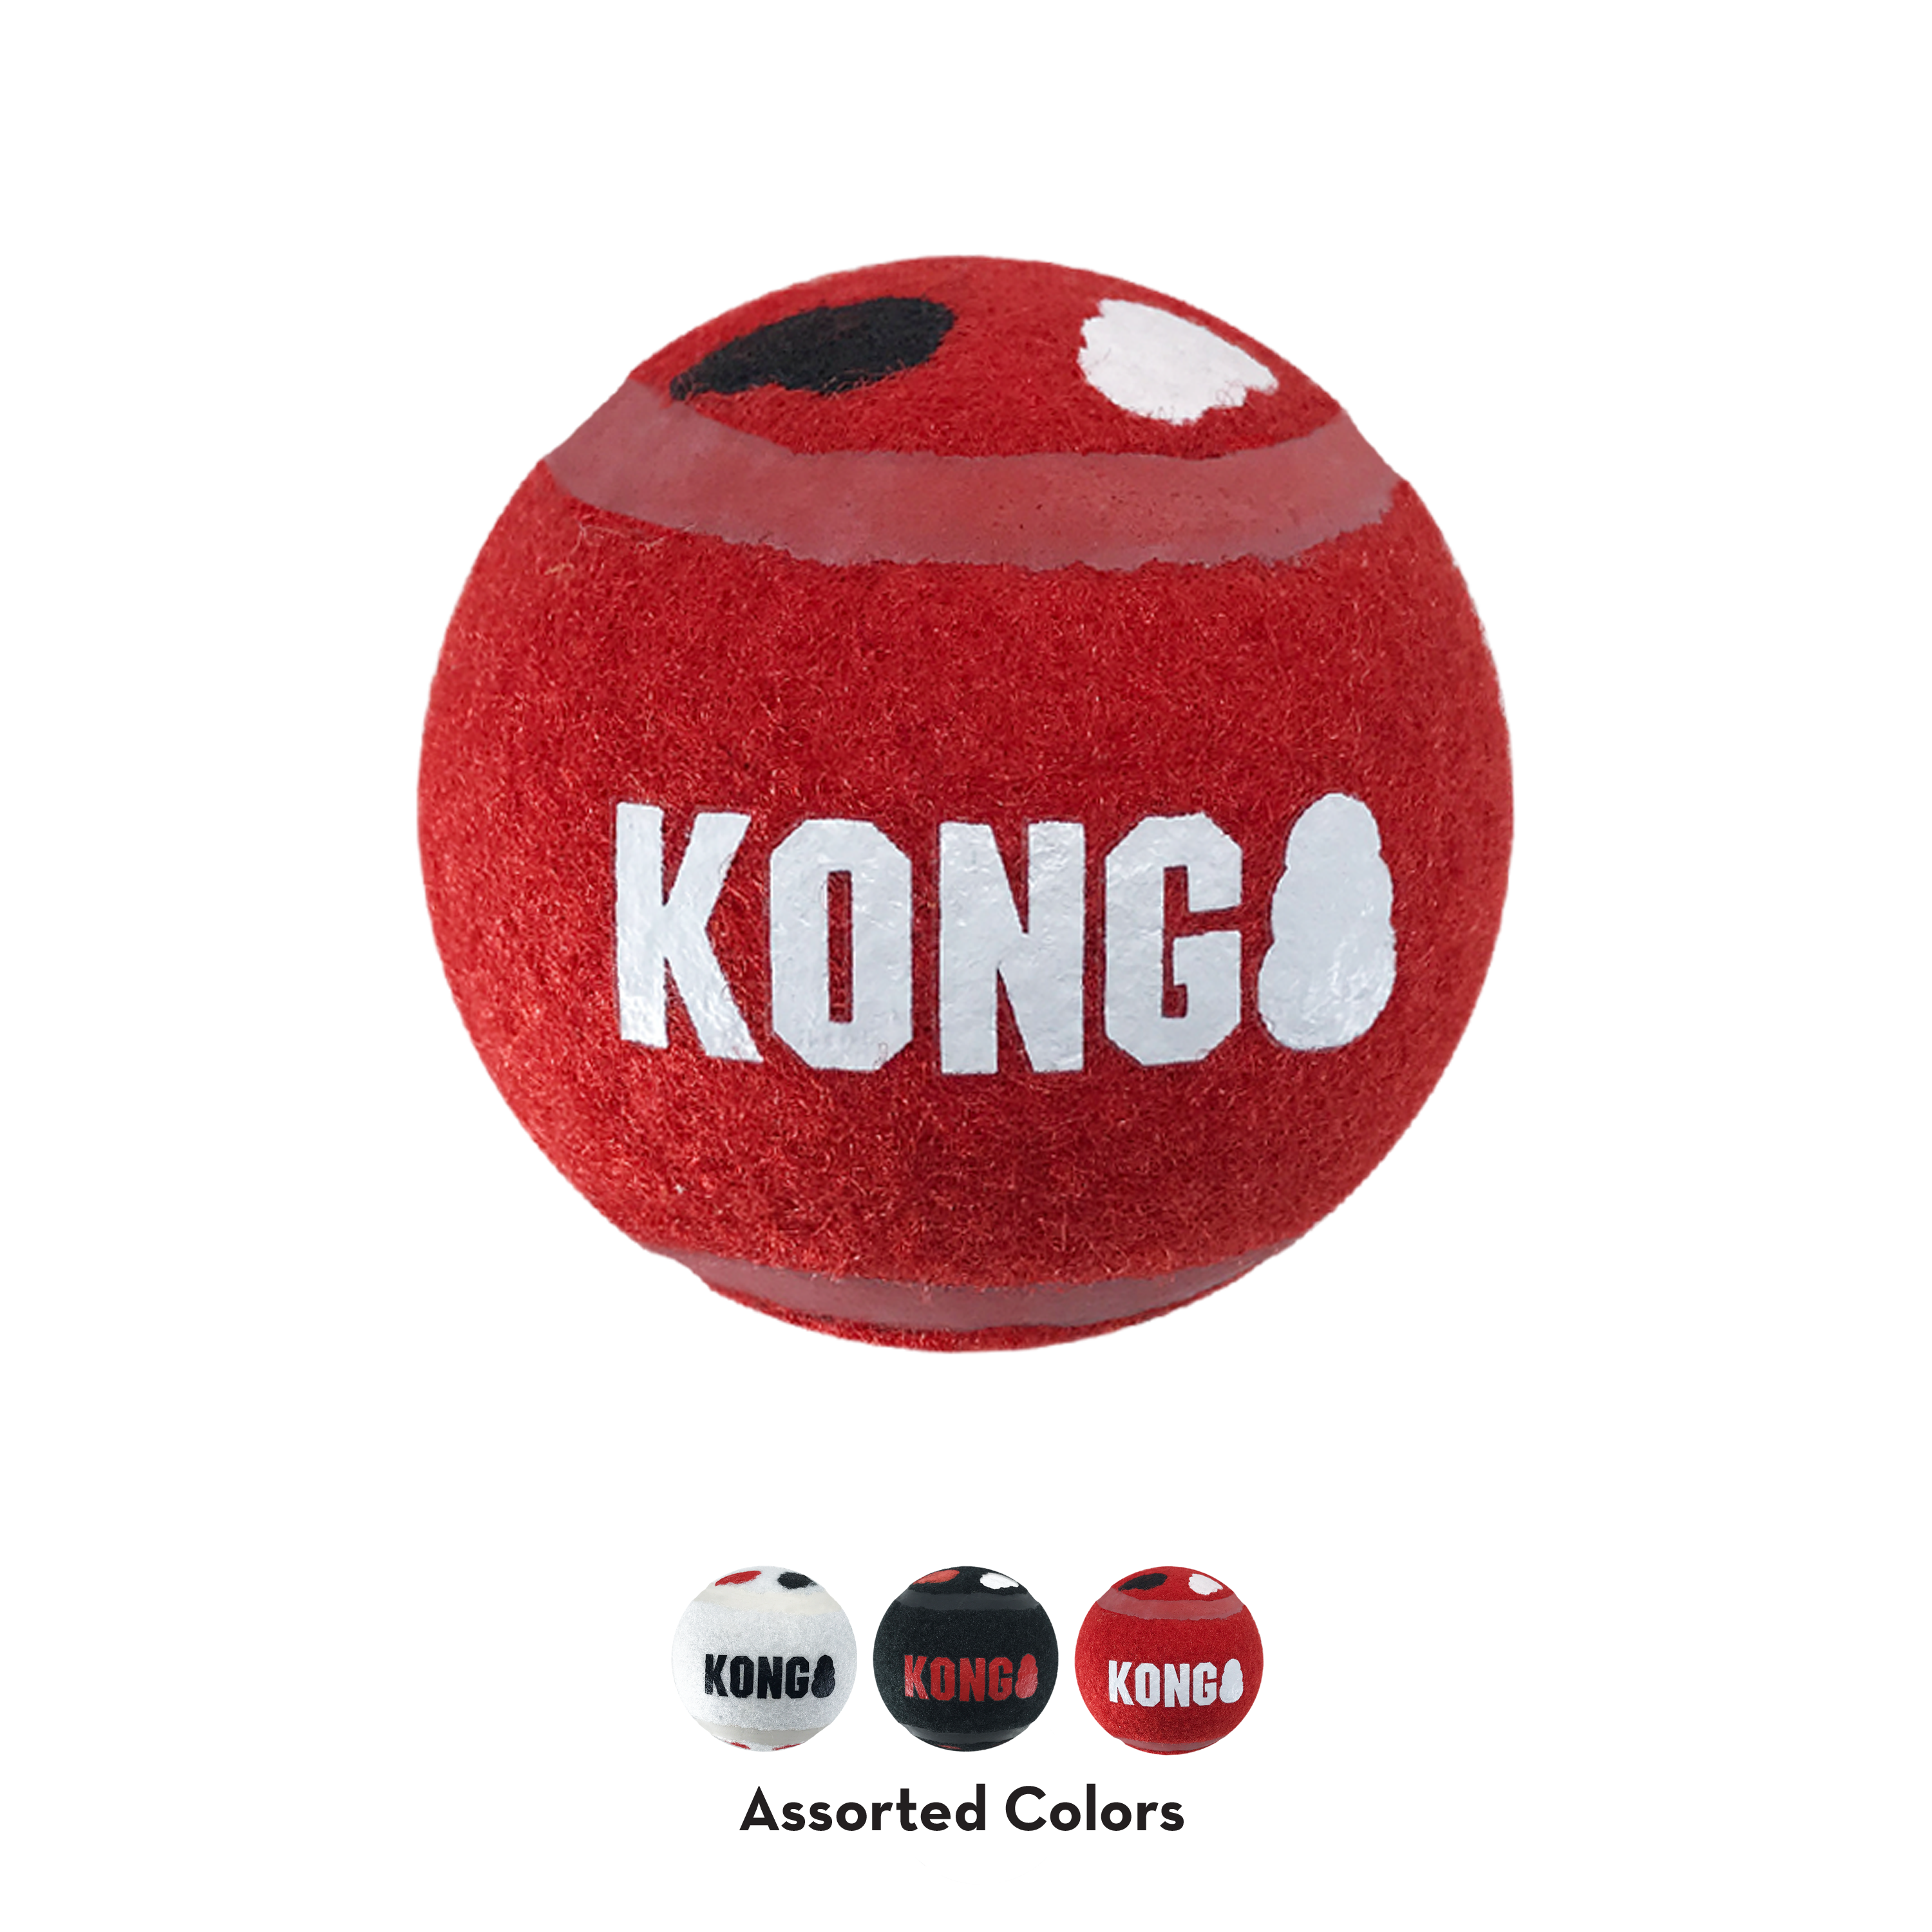 Signature Sport Balls - Pelotas Deportivas de Kong